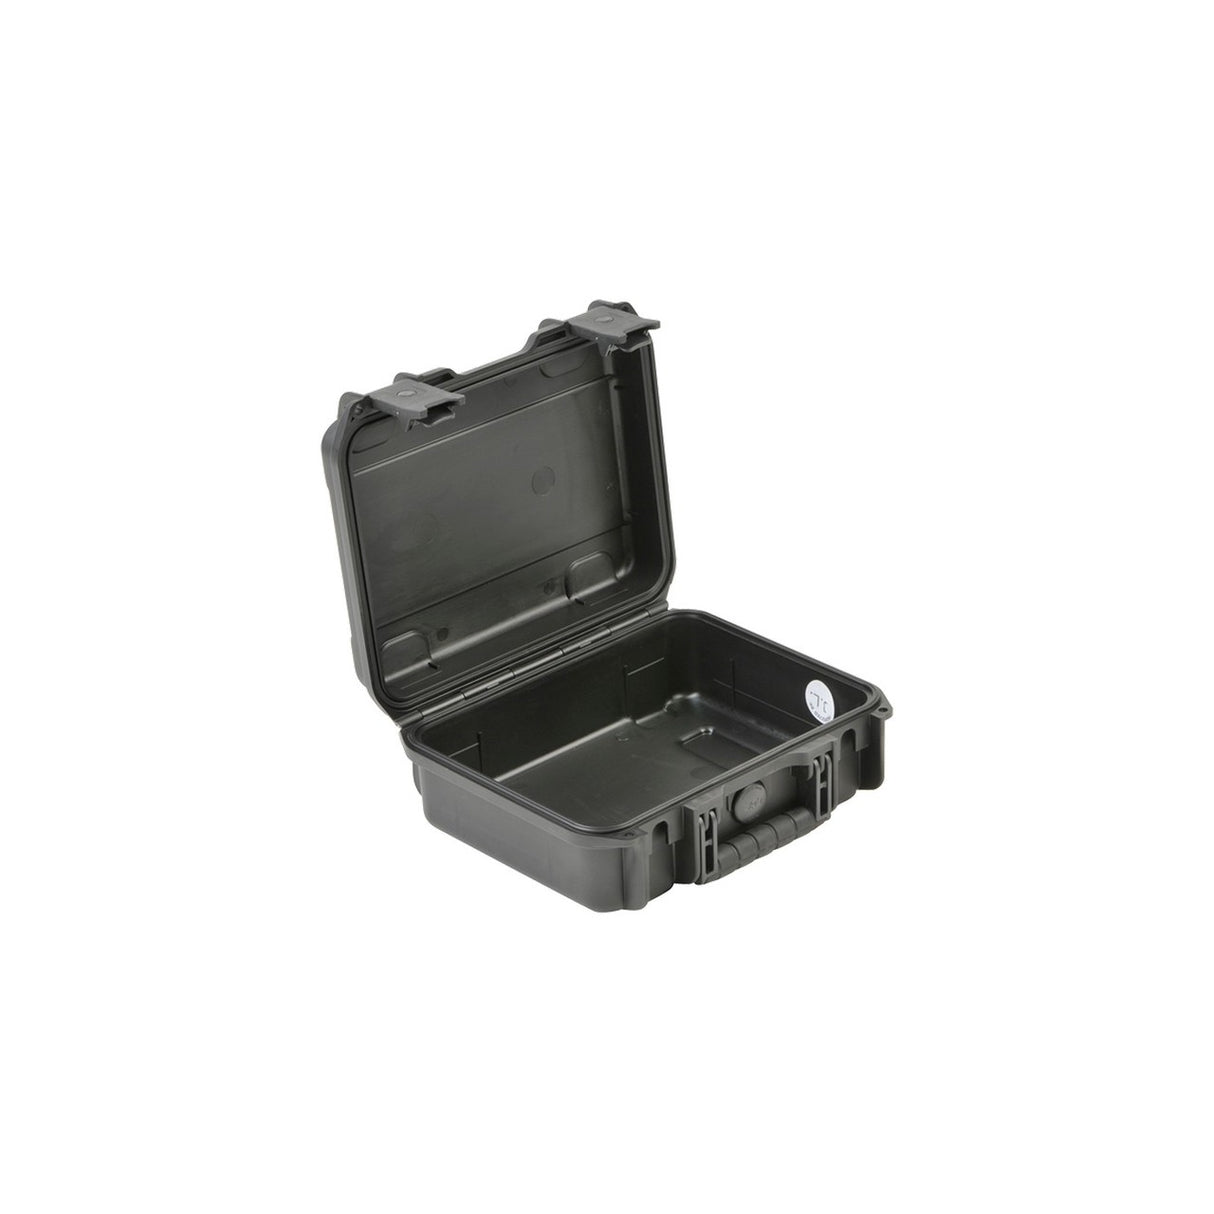 SKB 3I-1209-4B-E iSeries Waterproof Audio Equipment Case